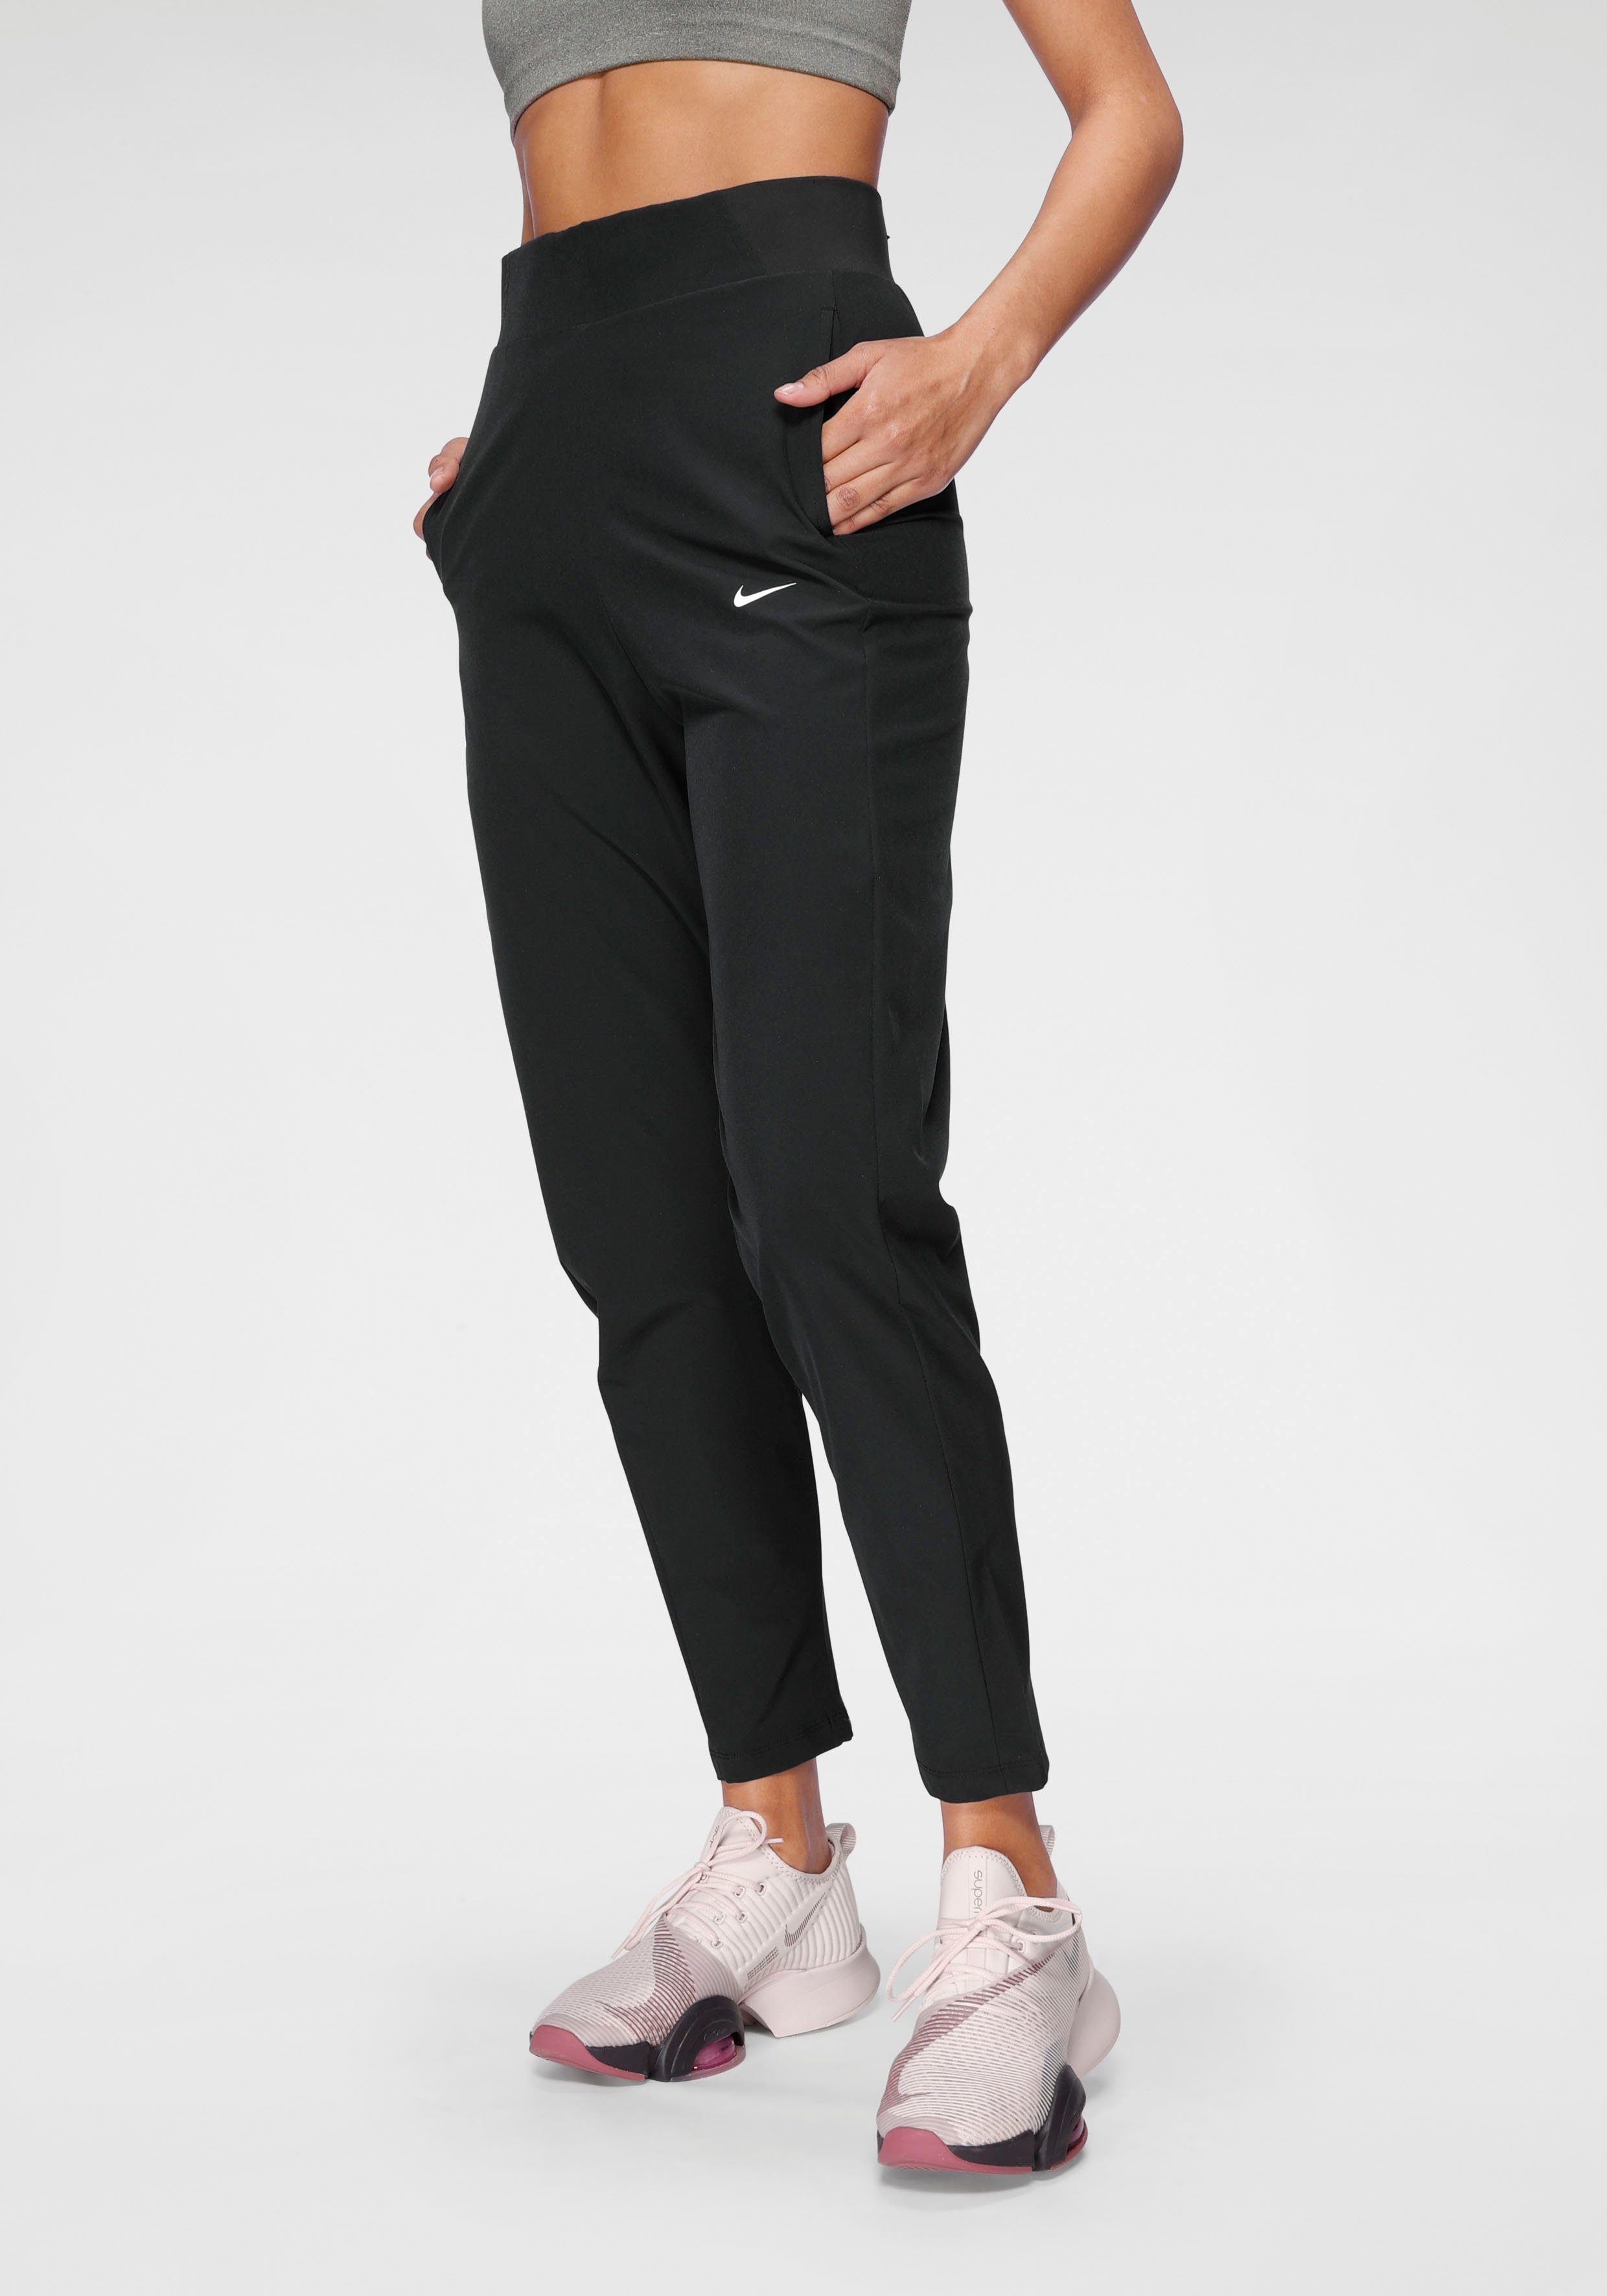 Nike Trainingshose »Bliss Vctry Pant Women's Training Pants« online kaufen  | OTTO